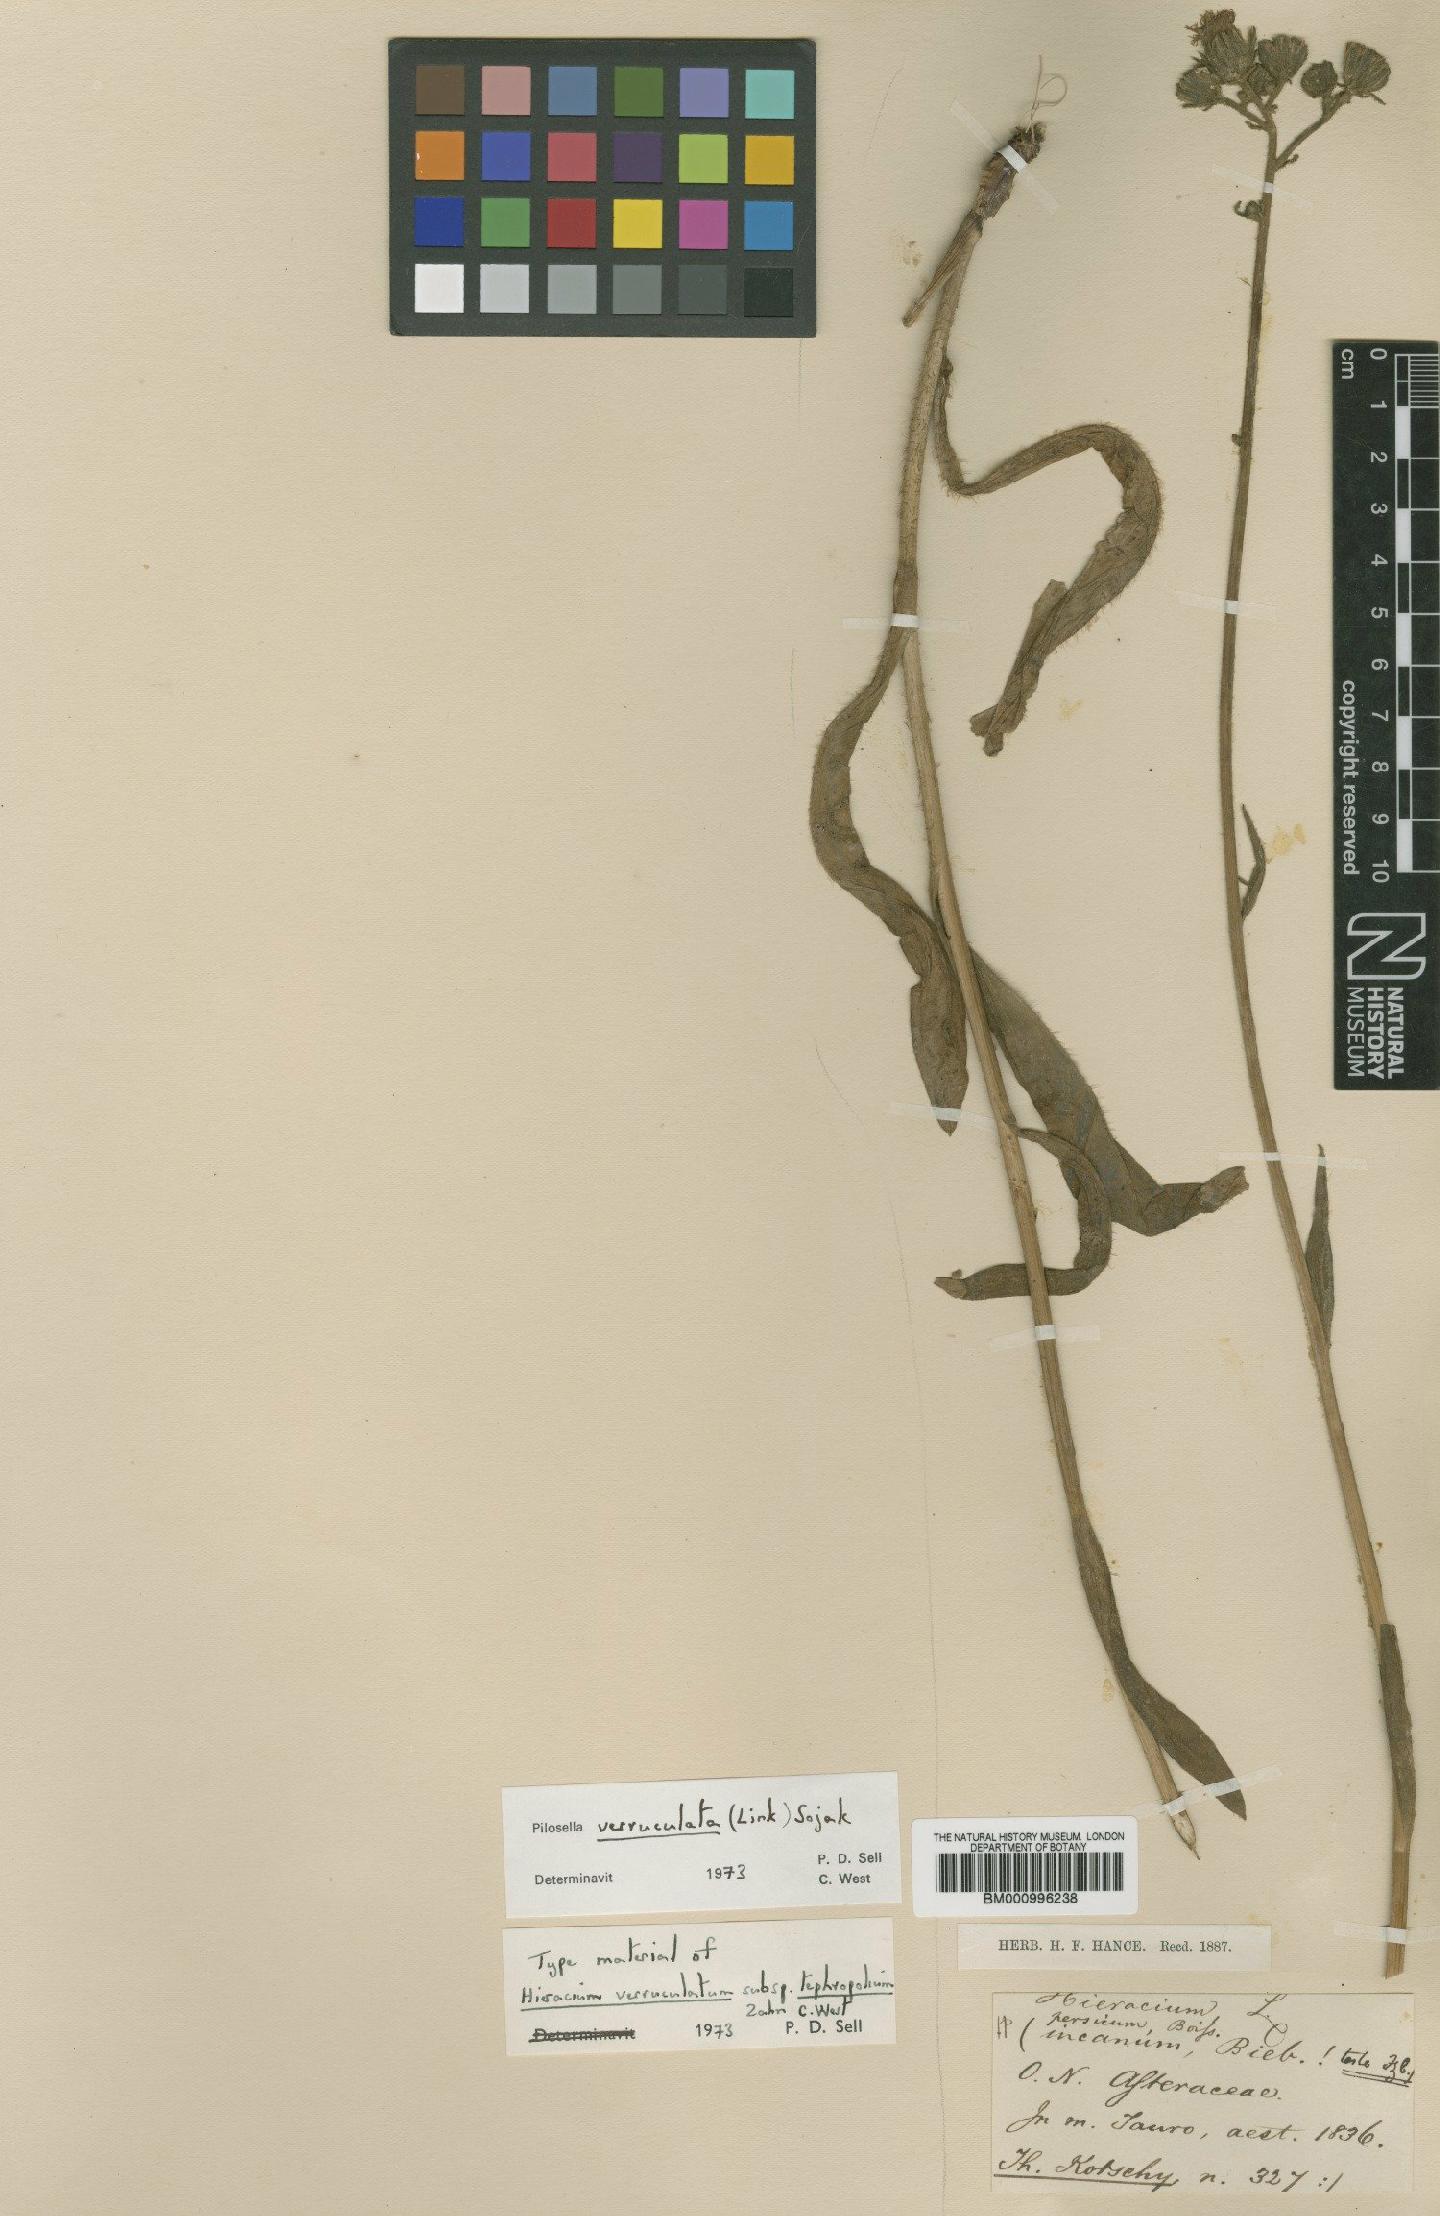 To NHMUK collection (Pilosella verruculata (Link) Sojak; Type; NHMUK:ecatalogue:480433)